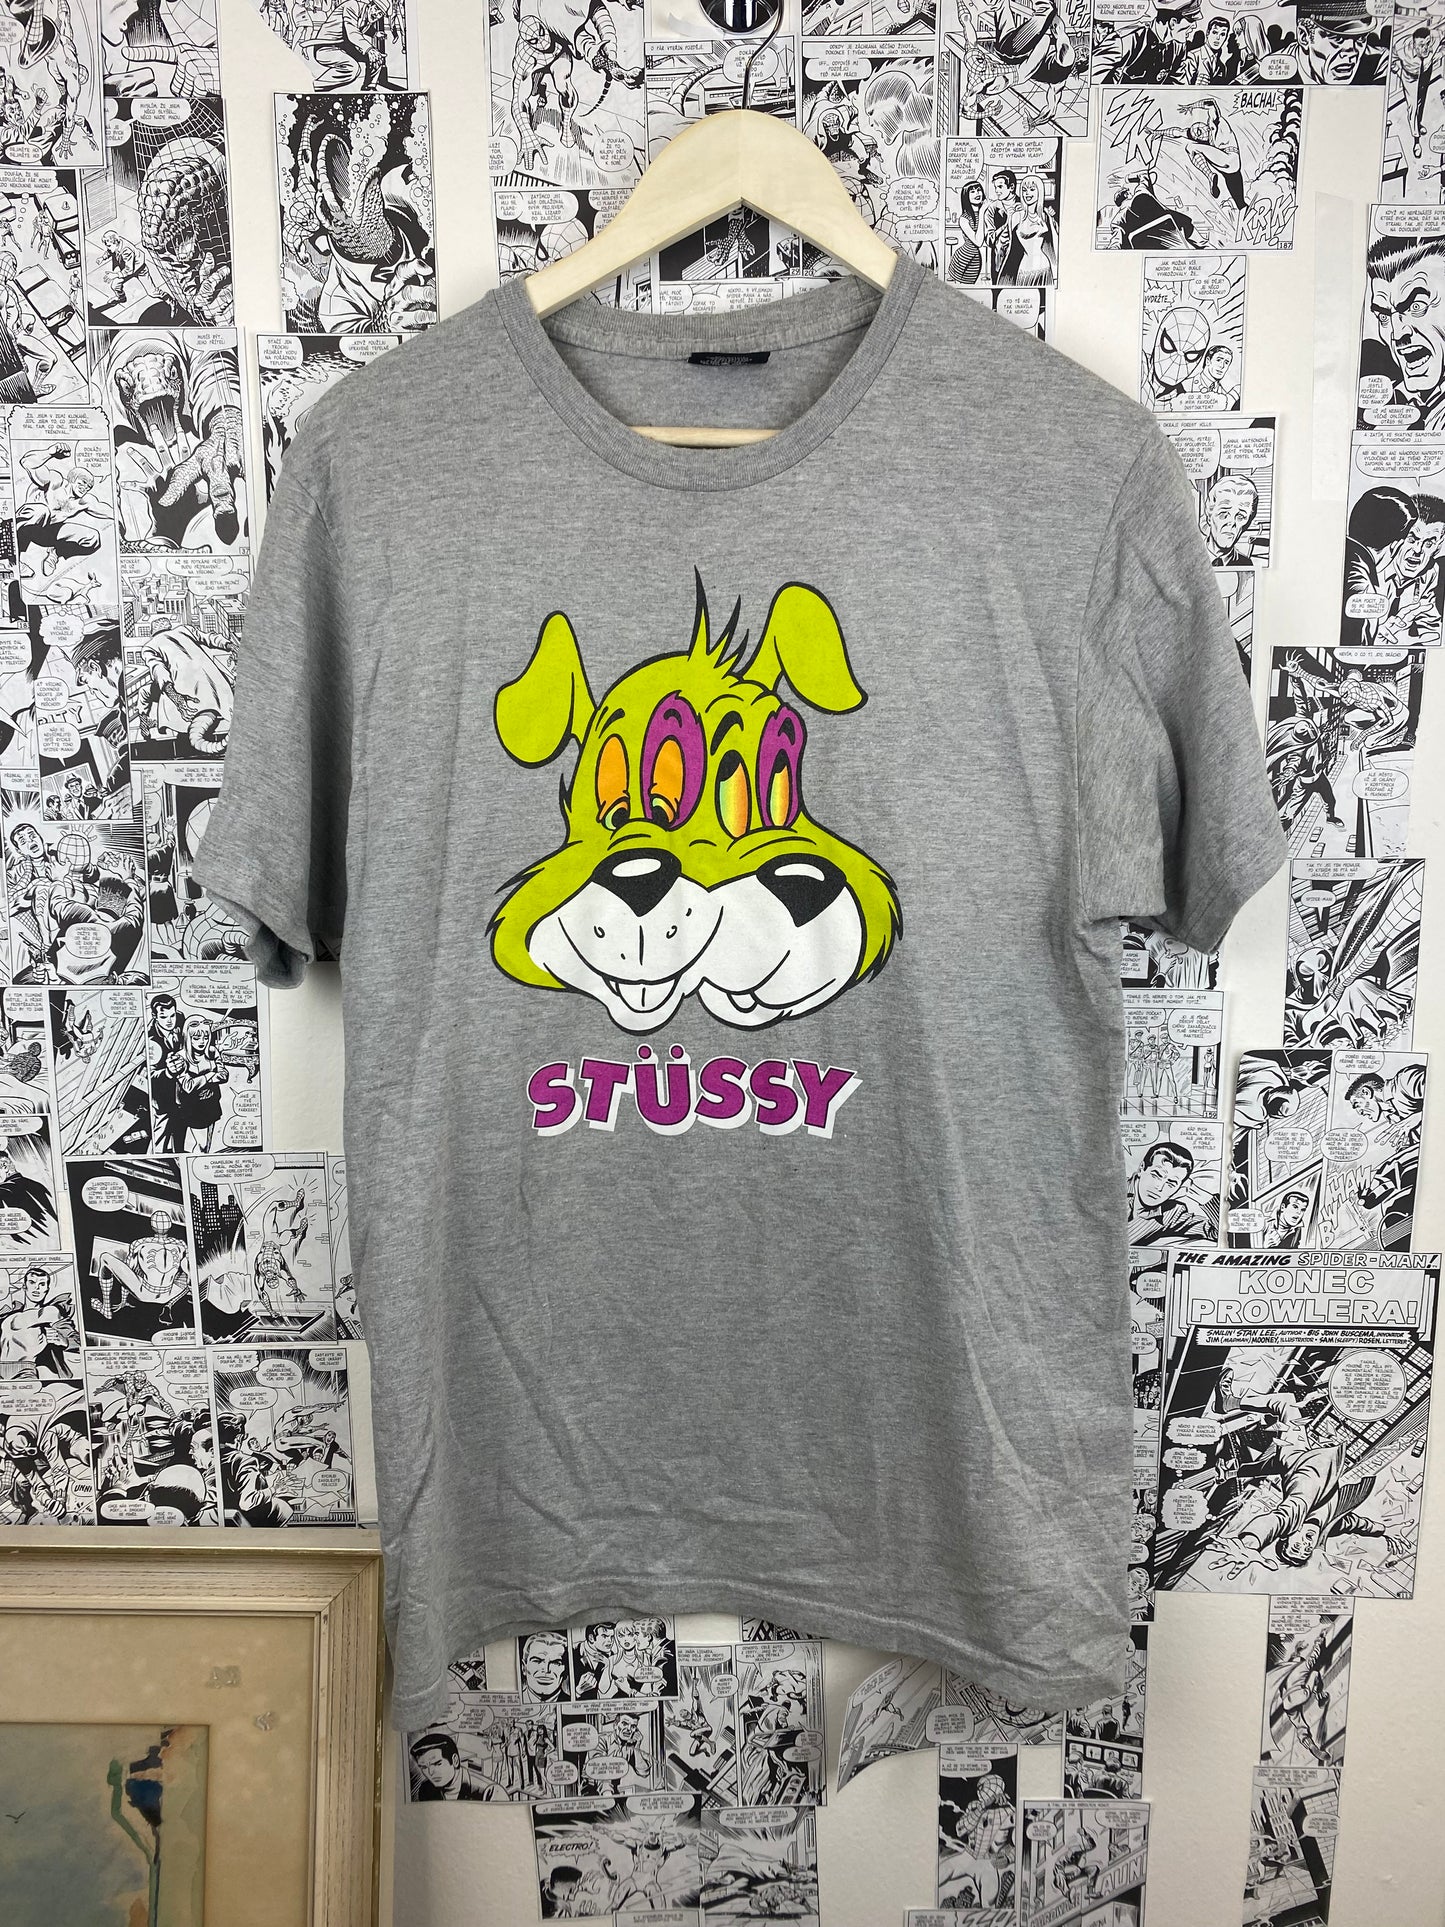 Stüssy “Chill Dog” t-shirt - size M